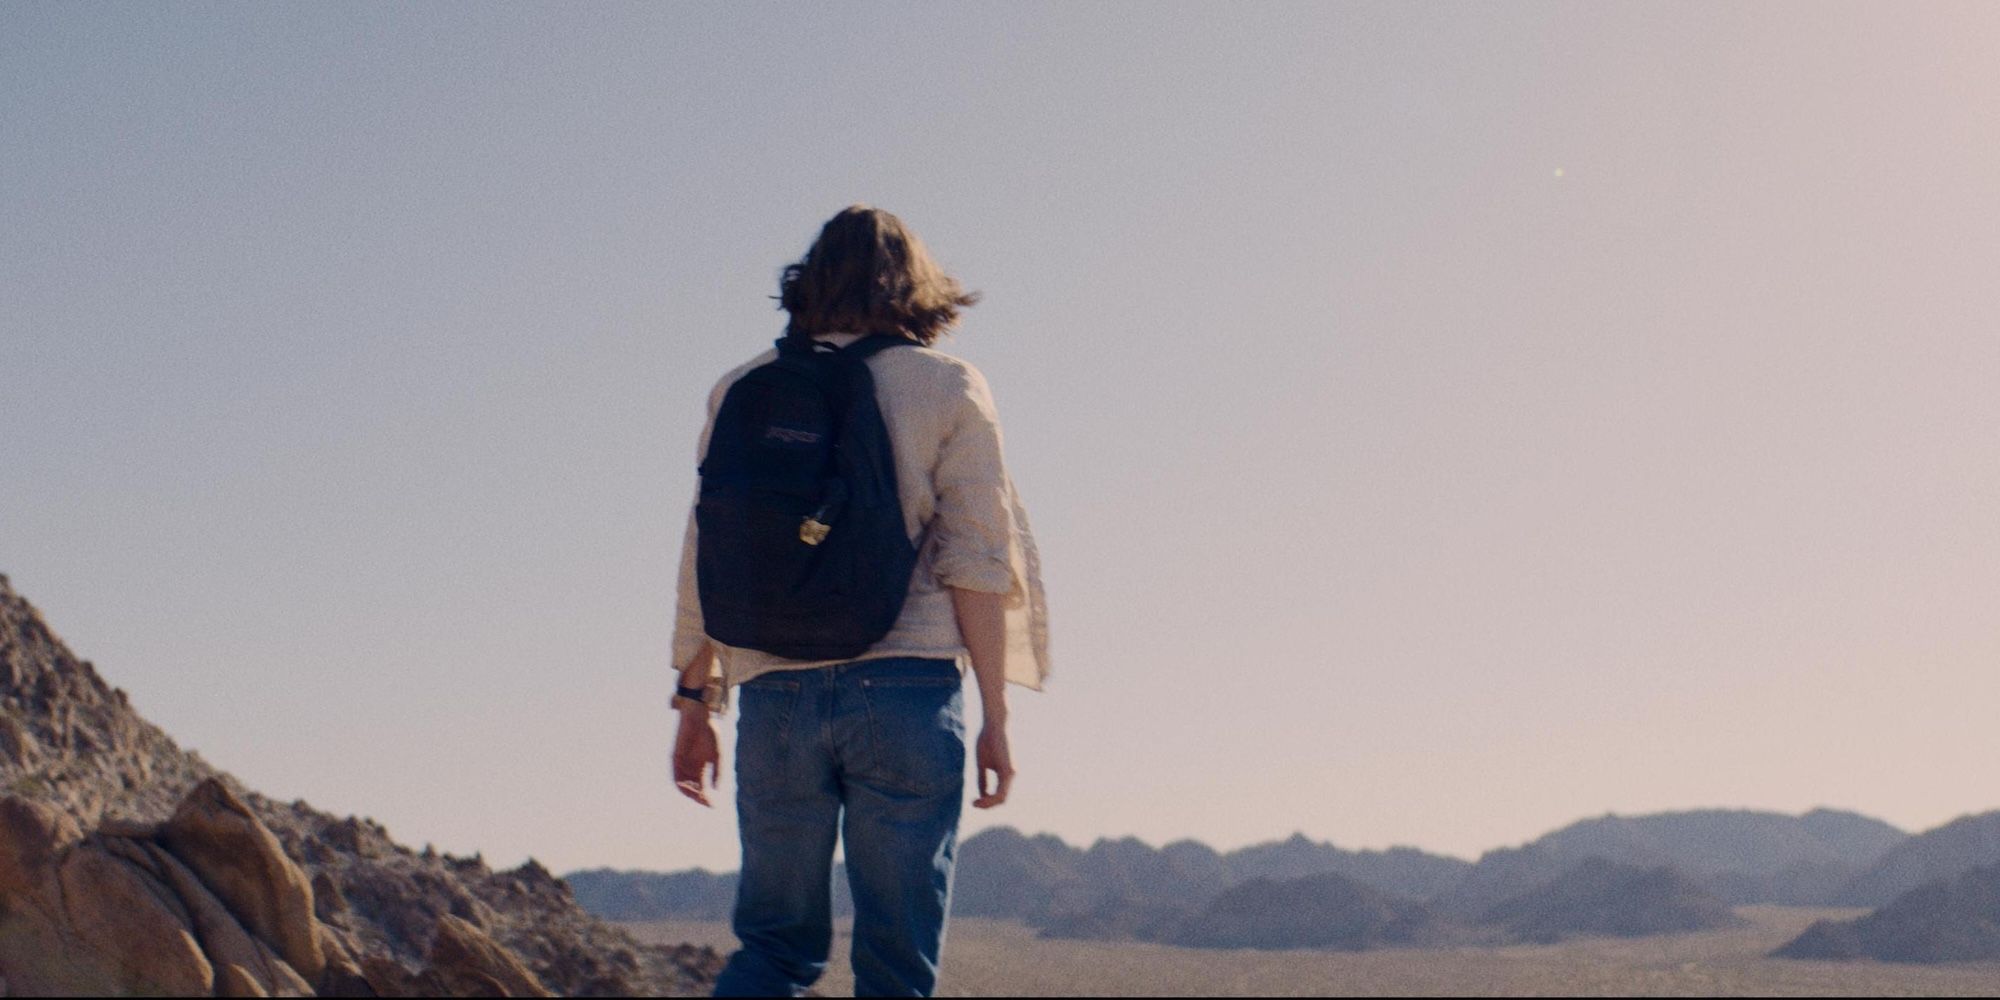 Kristine Froseth stares into the endless desert in Desert Road movie